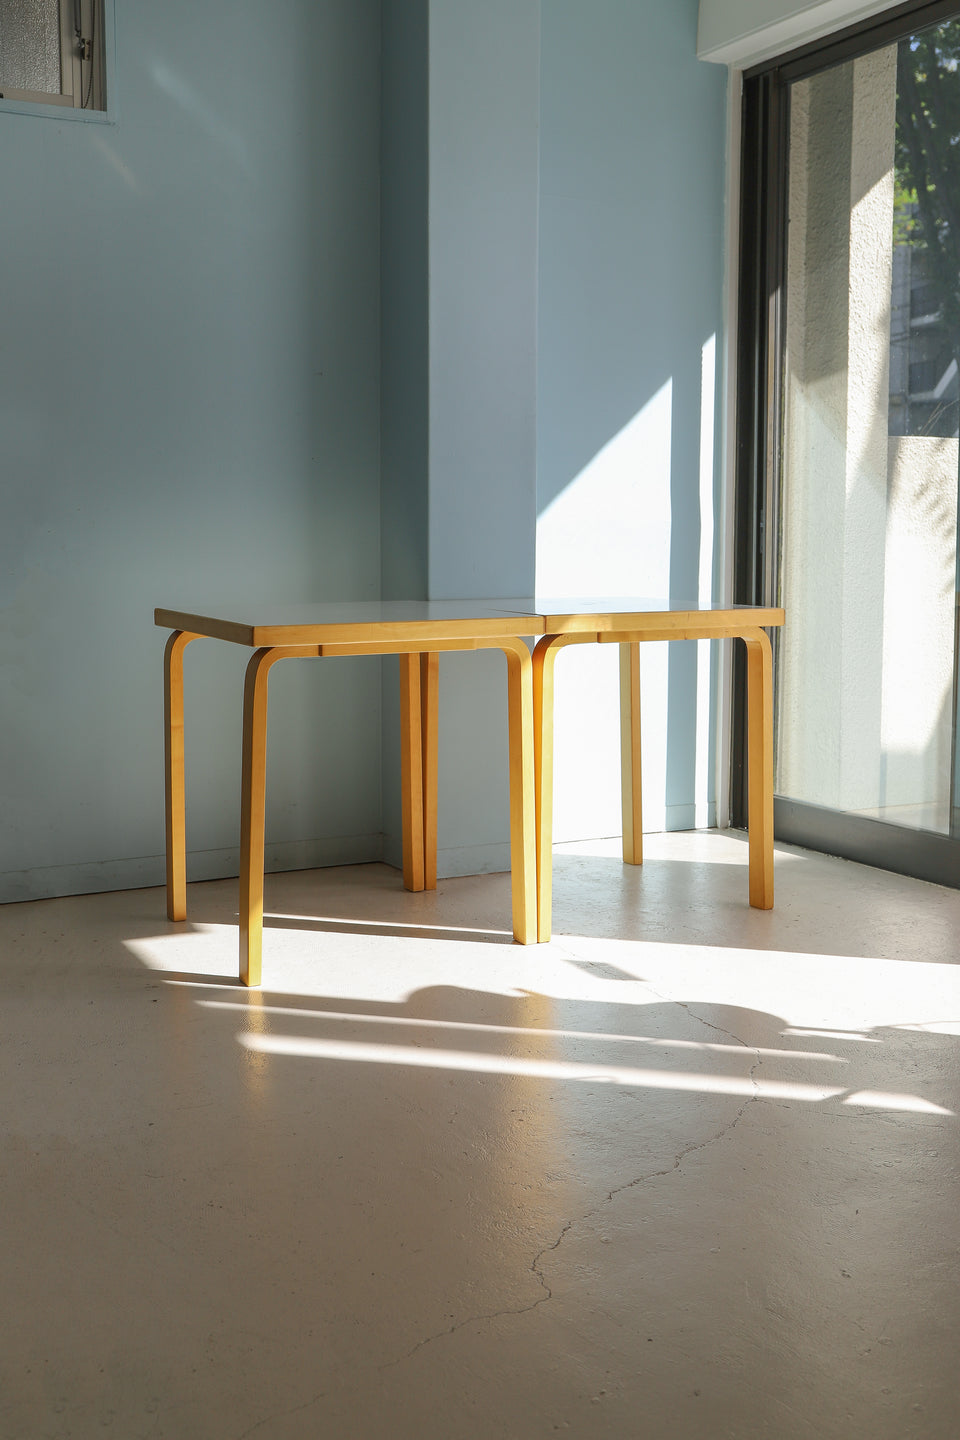 Alvar Aalto artek Table Finnish Vintage/フィンランドヴィンテージ アルテック テーブル デスク アルヴァ・アアルト 北欧家具